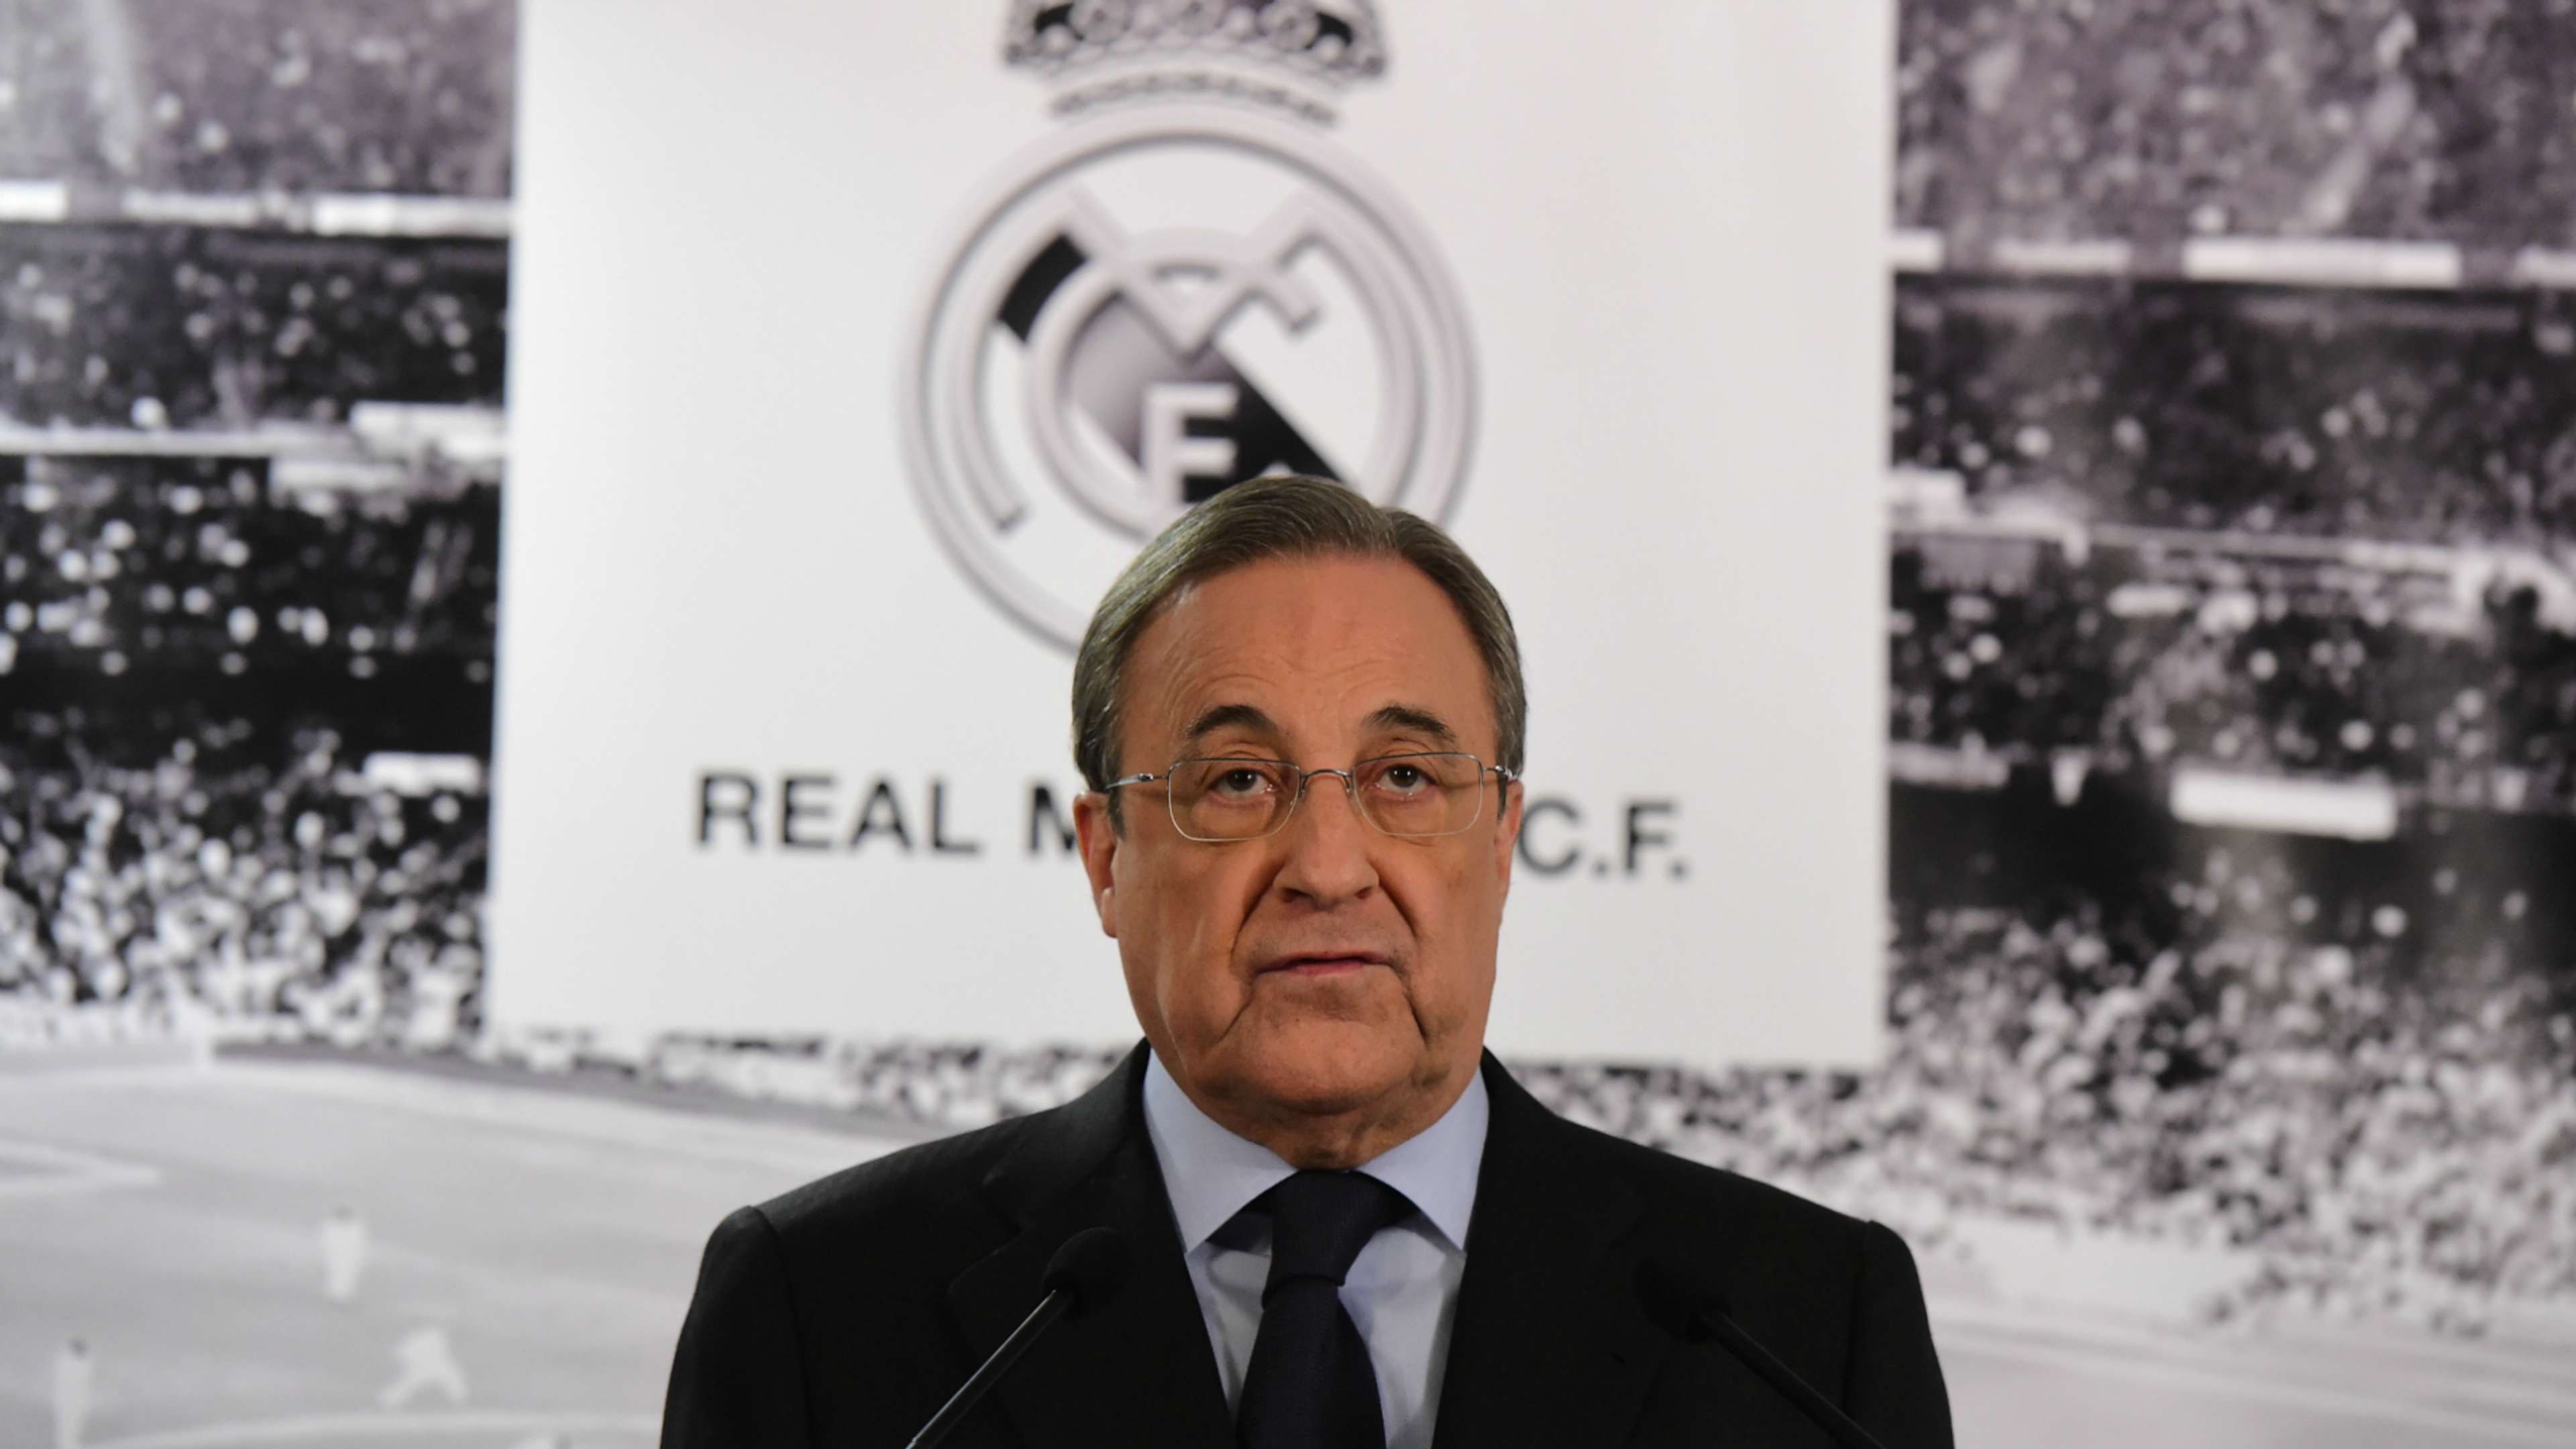 Florentino Perez Real Madrid press conference 23112015